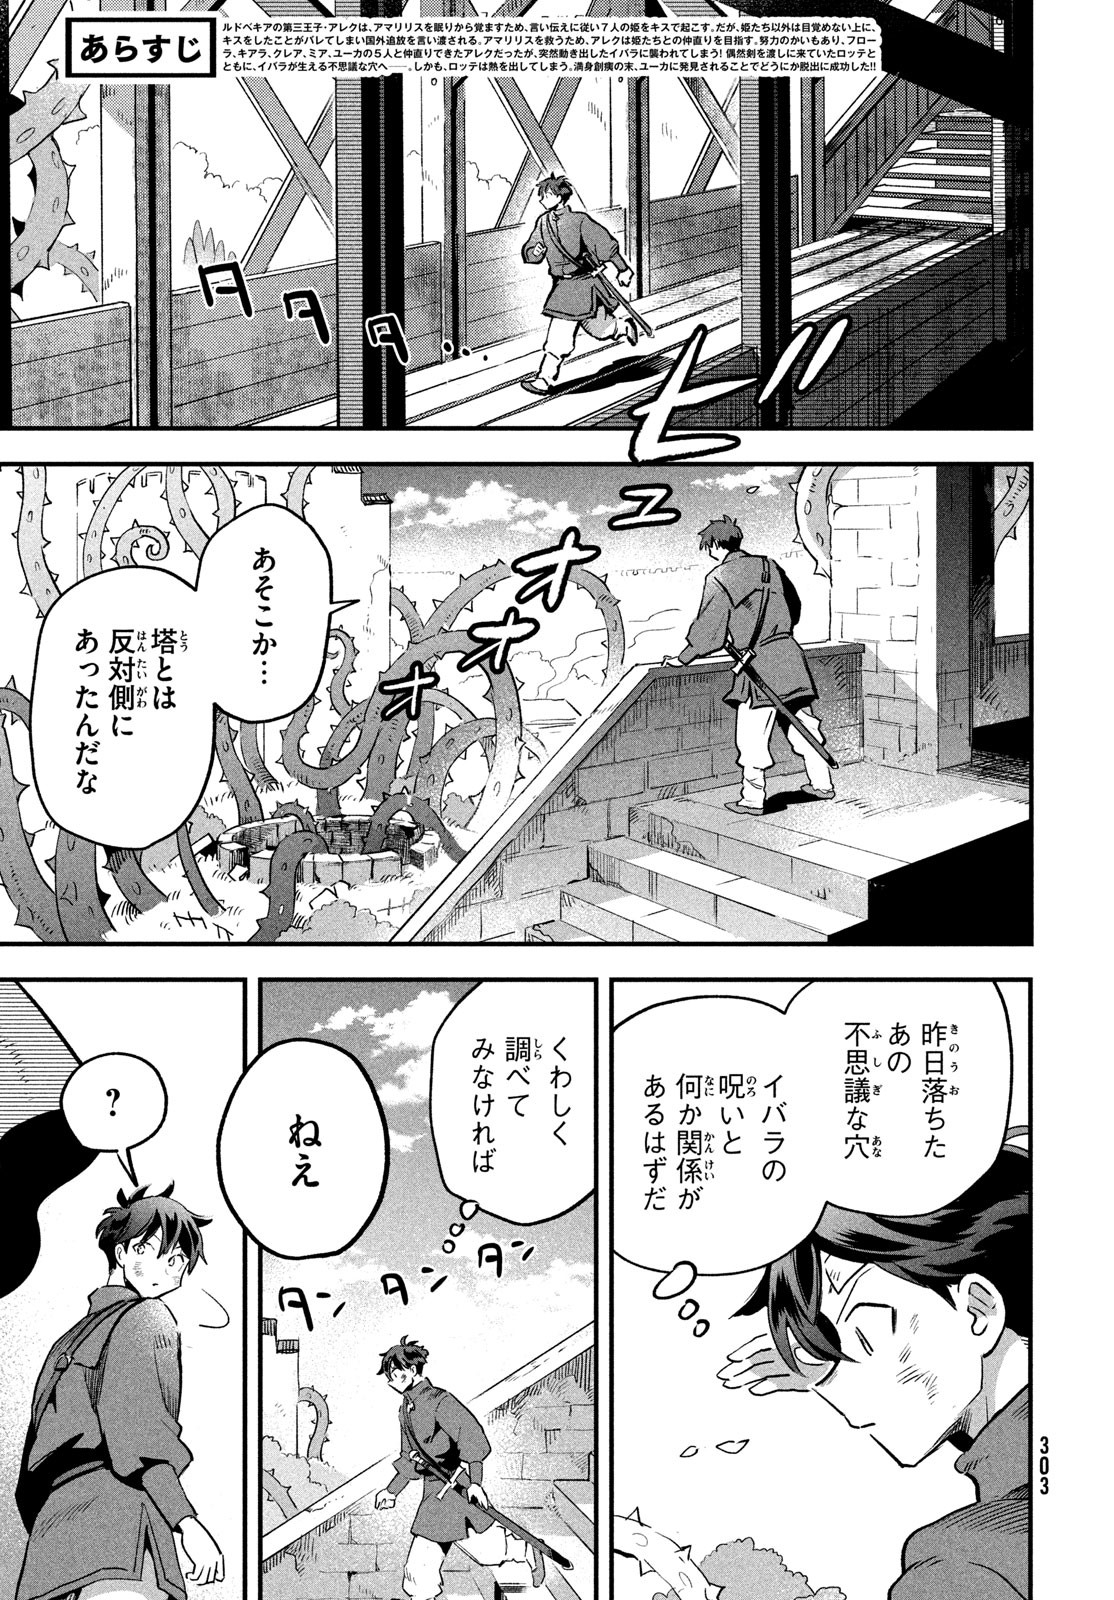 7-nin no Nemuri Hime - Chapter 25 - Page 3